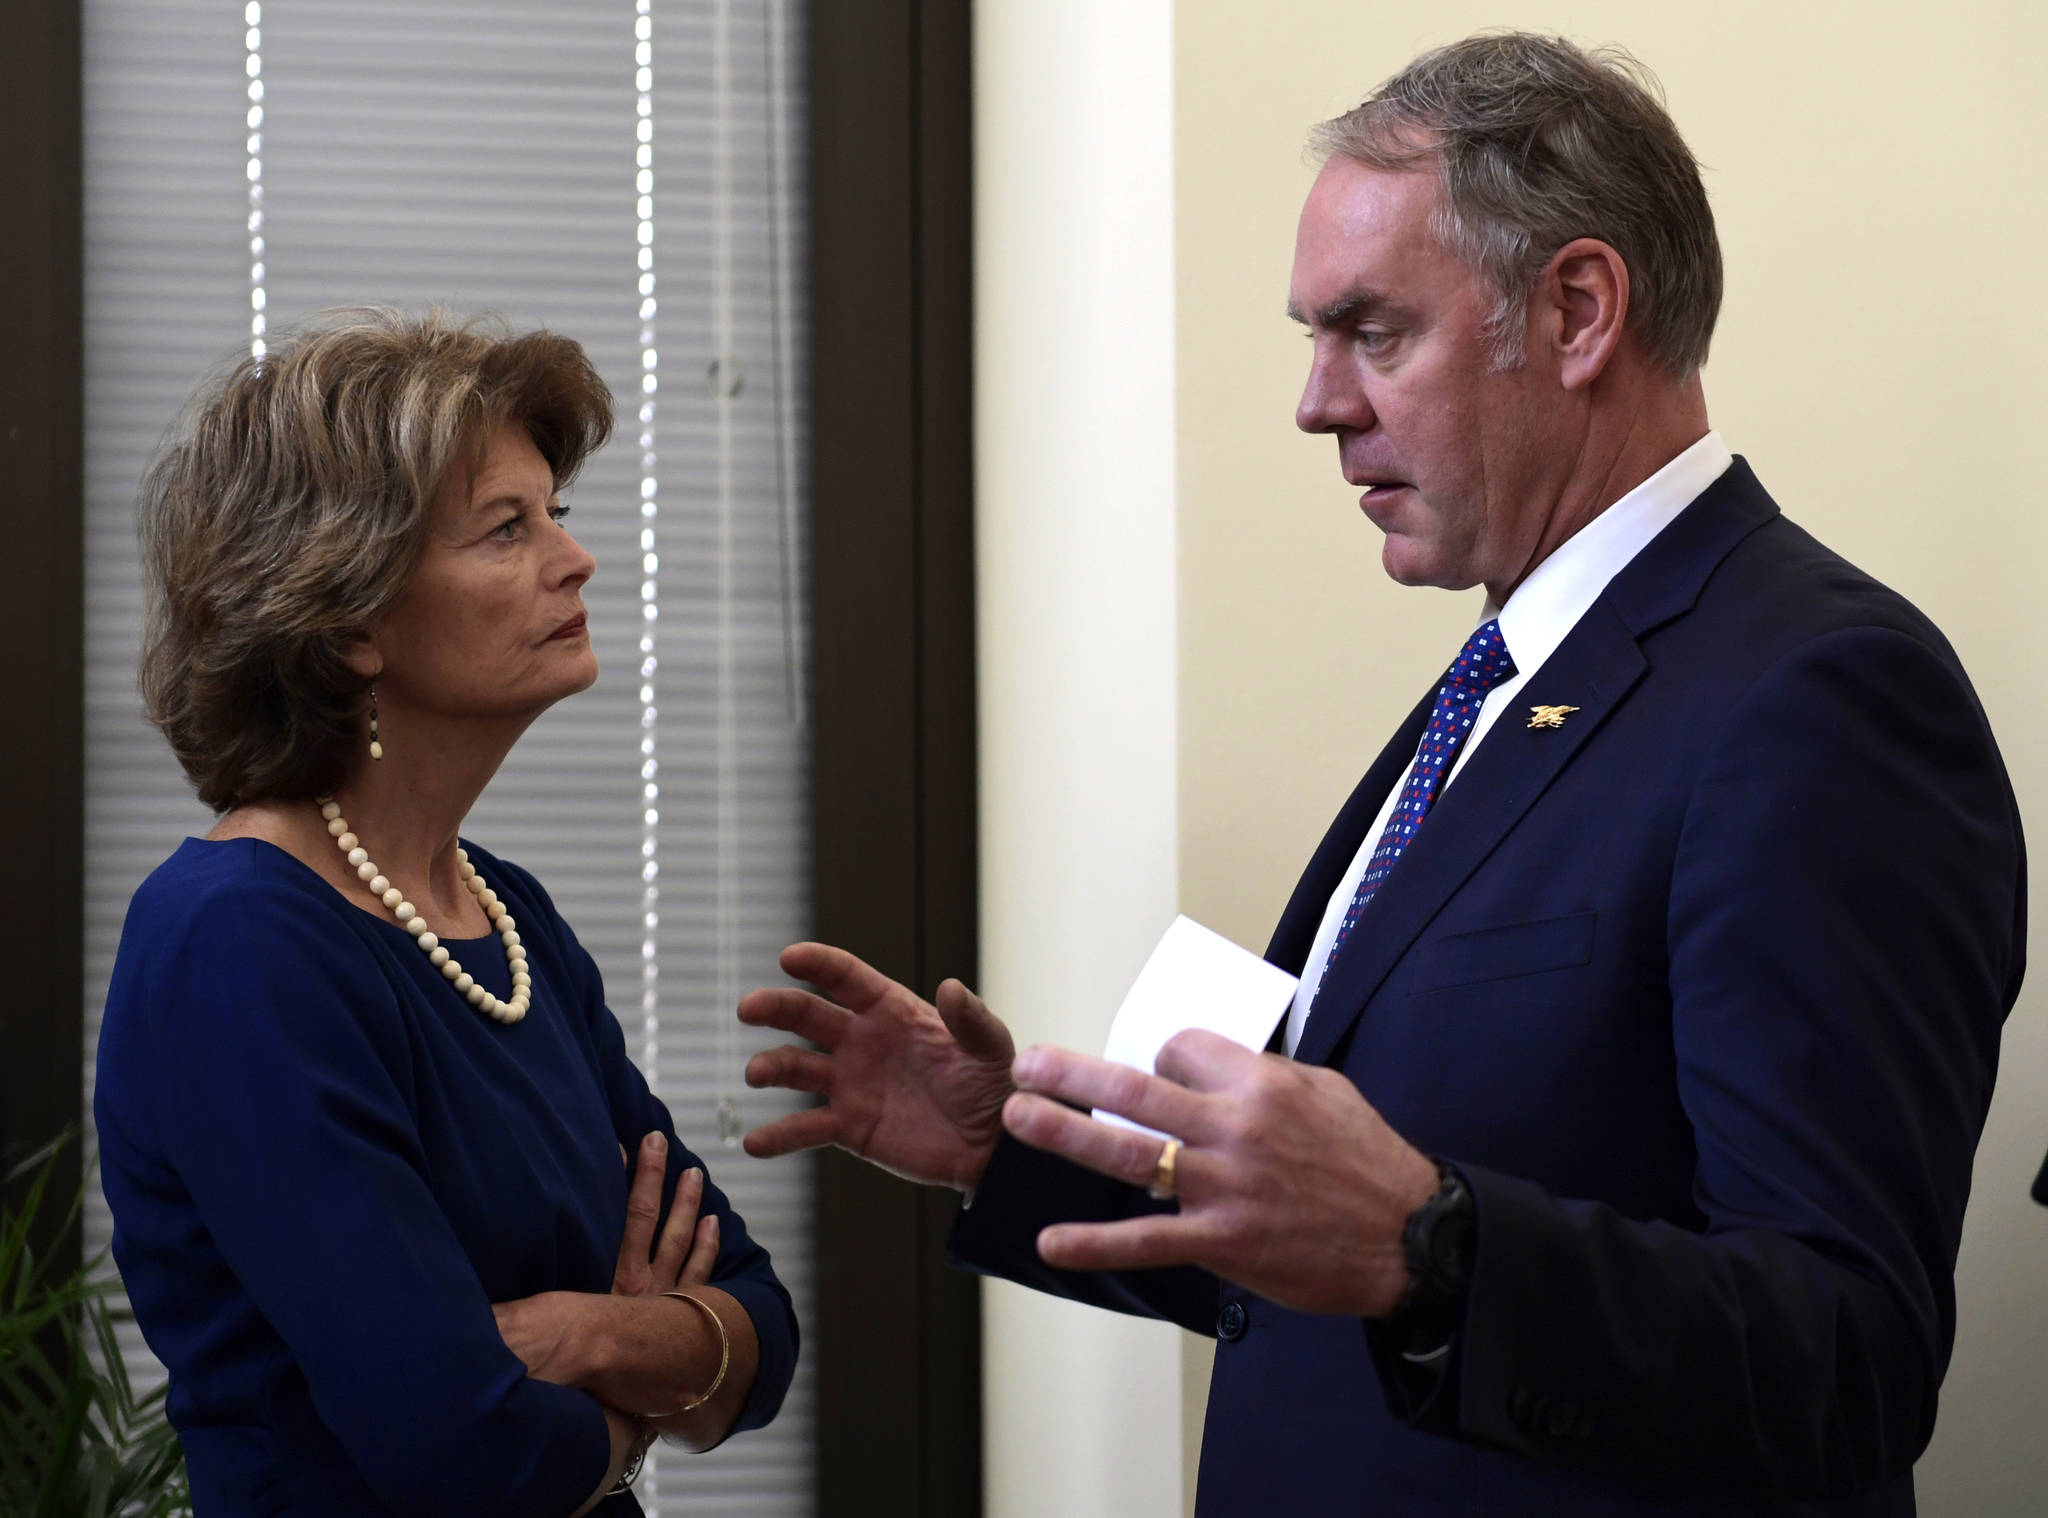 Sen. Lisa Murkowski, R-Alaska, left, talks with Interior Secretary Ryan Zinke, right, before an event in her office on Capitol Hill in Washington, Monday. (AP Photo/Susan Walsh)